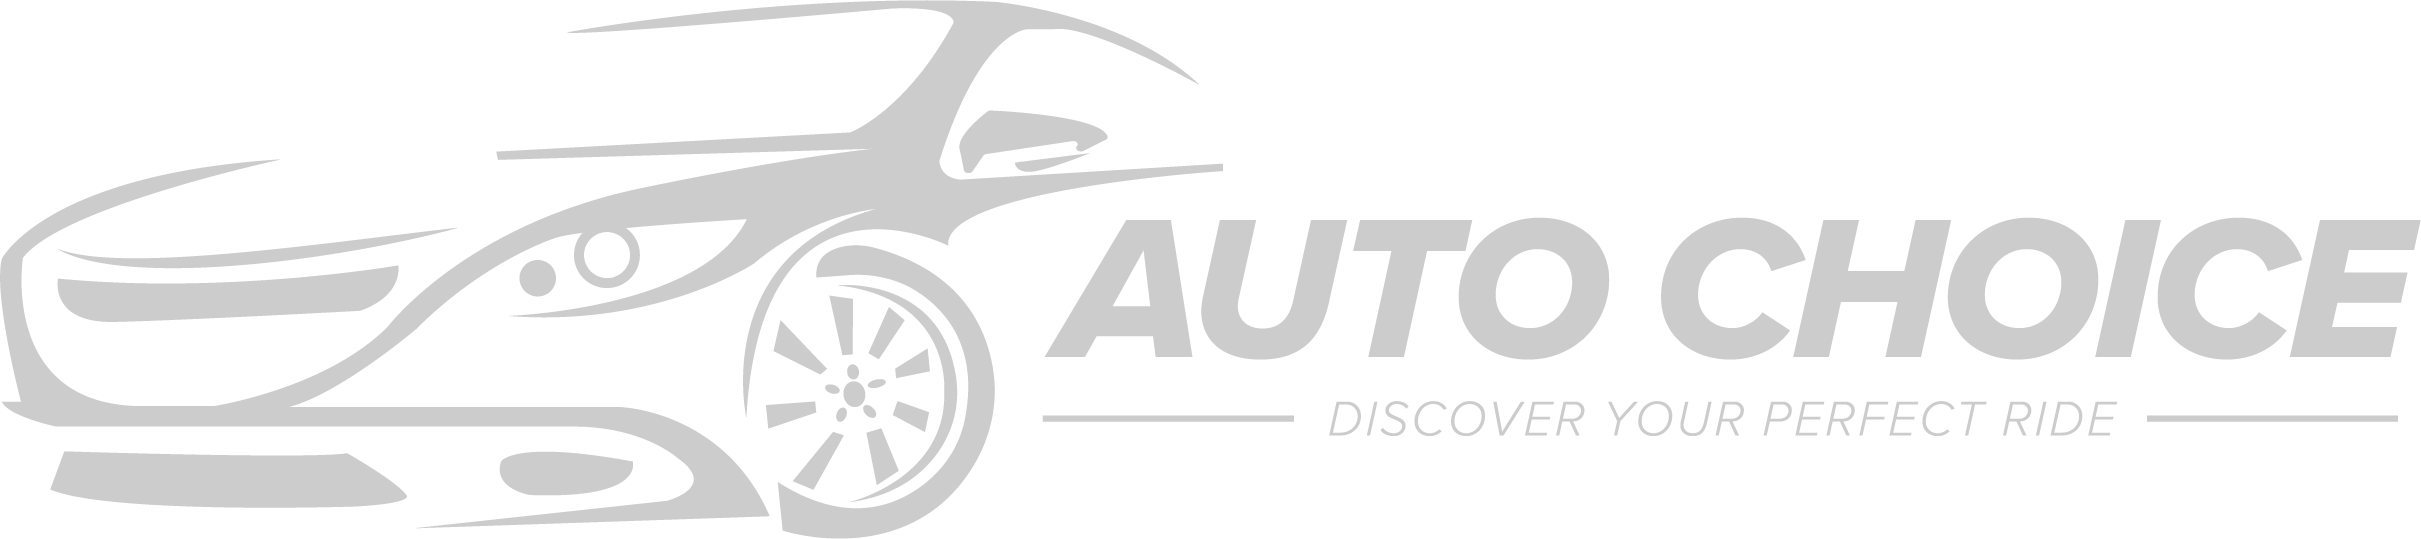 Auto Choice Used Cars logo